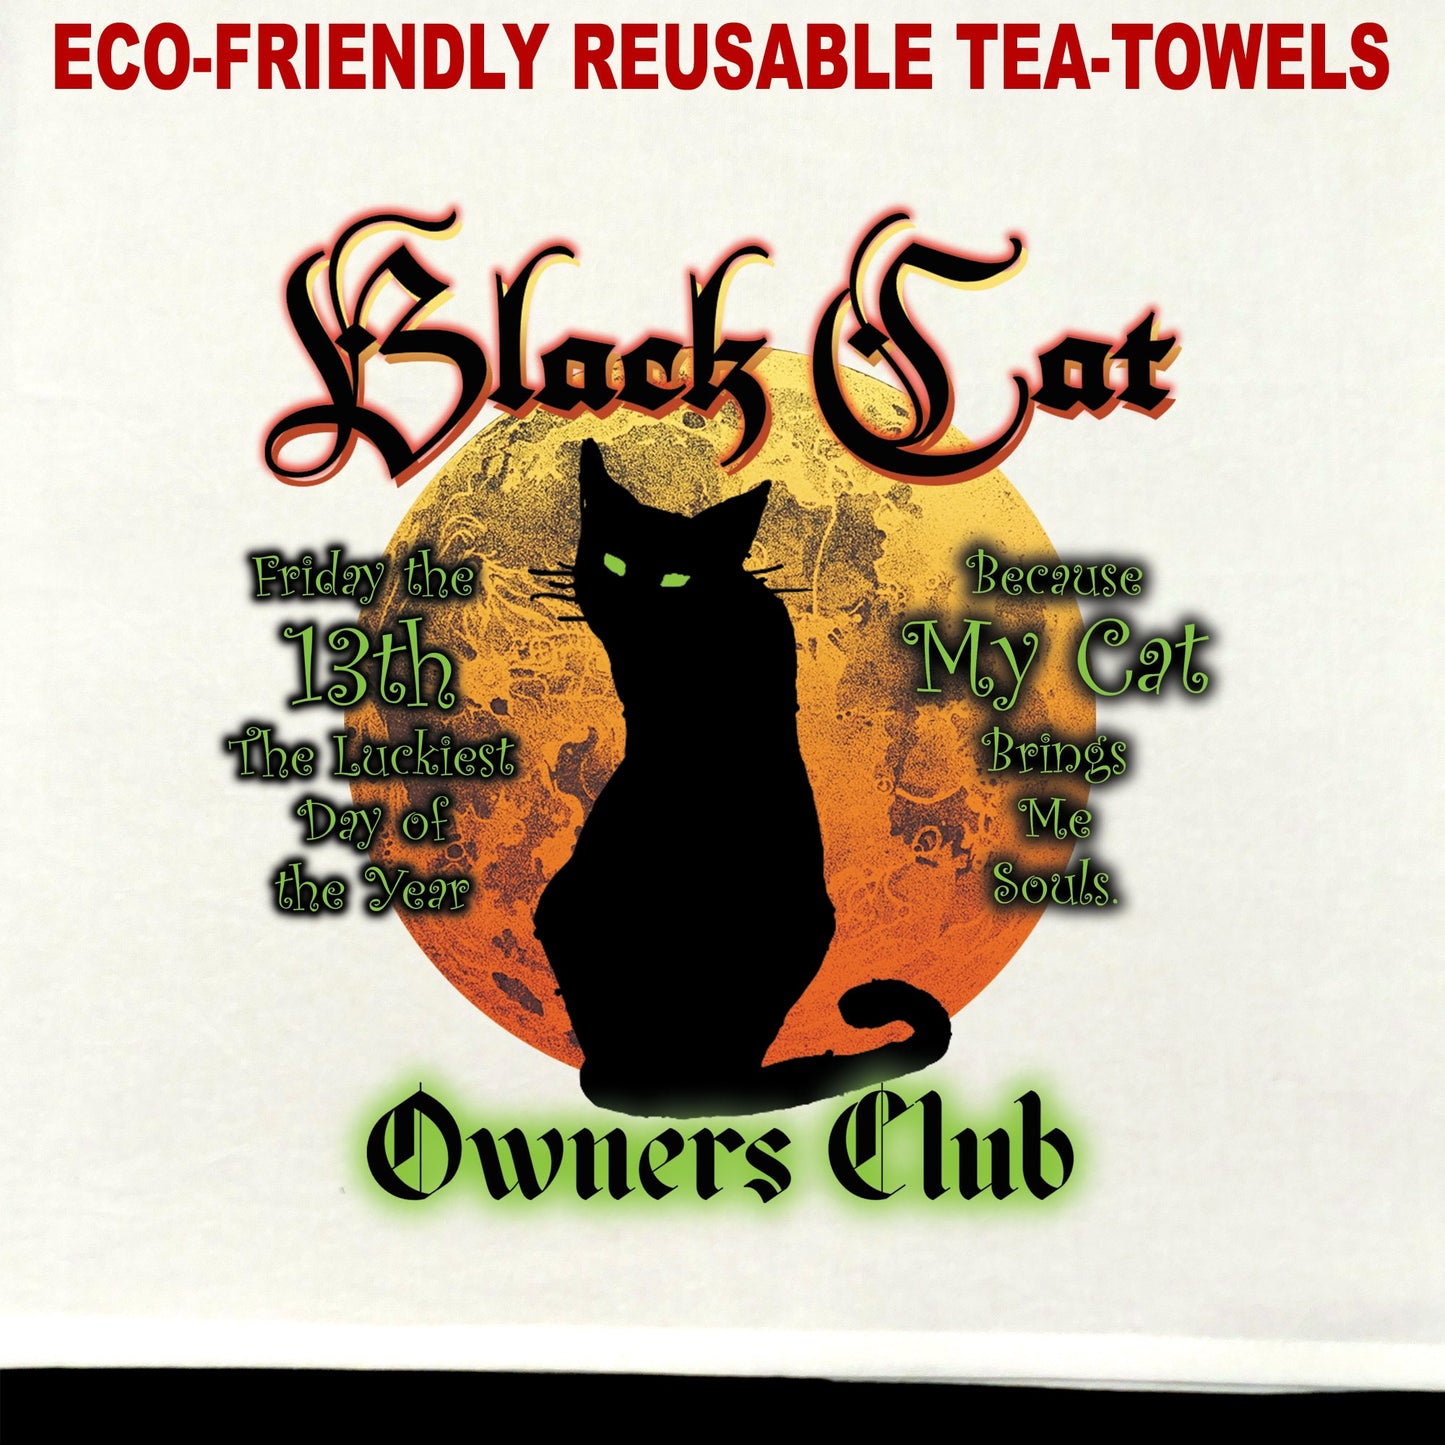 Black Cat Owners Club Tea Towel / tea towel / dish towel / hand towel / reusable wipe / kitchen gift / kitchen deco